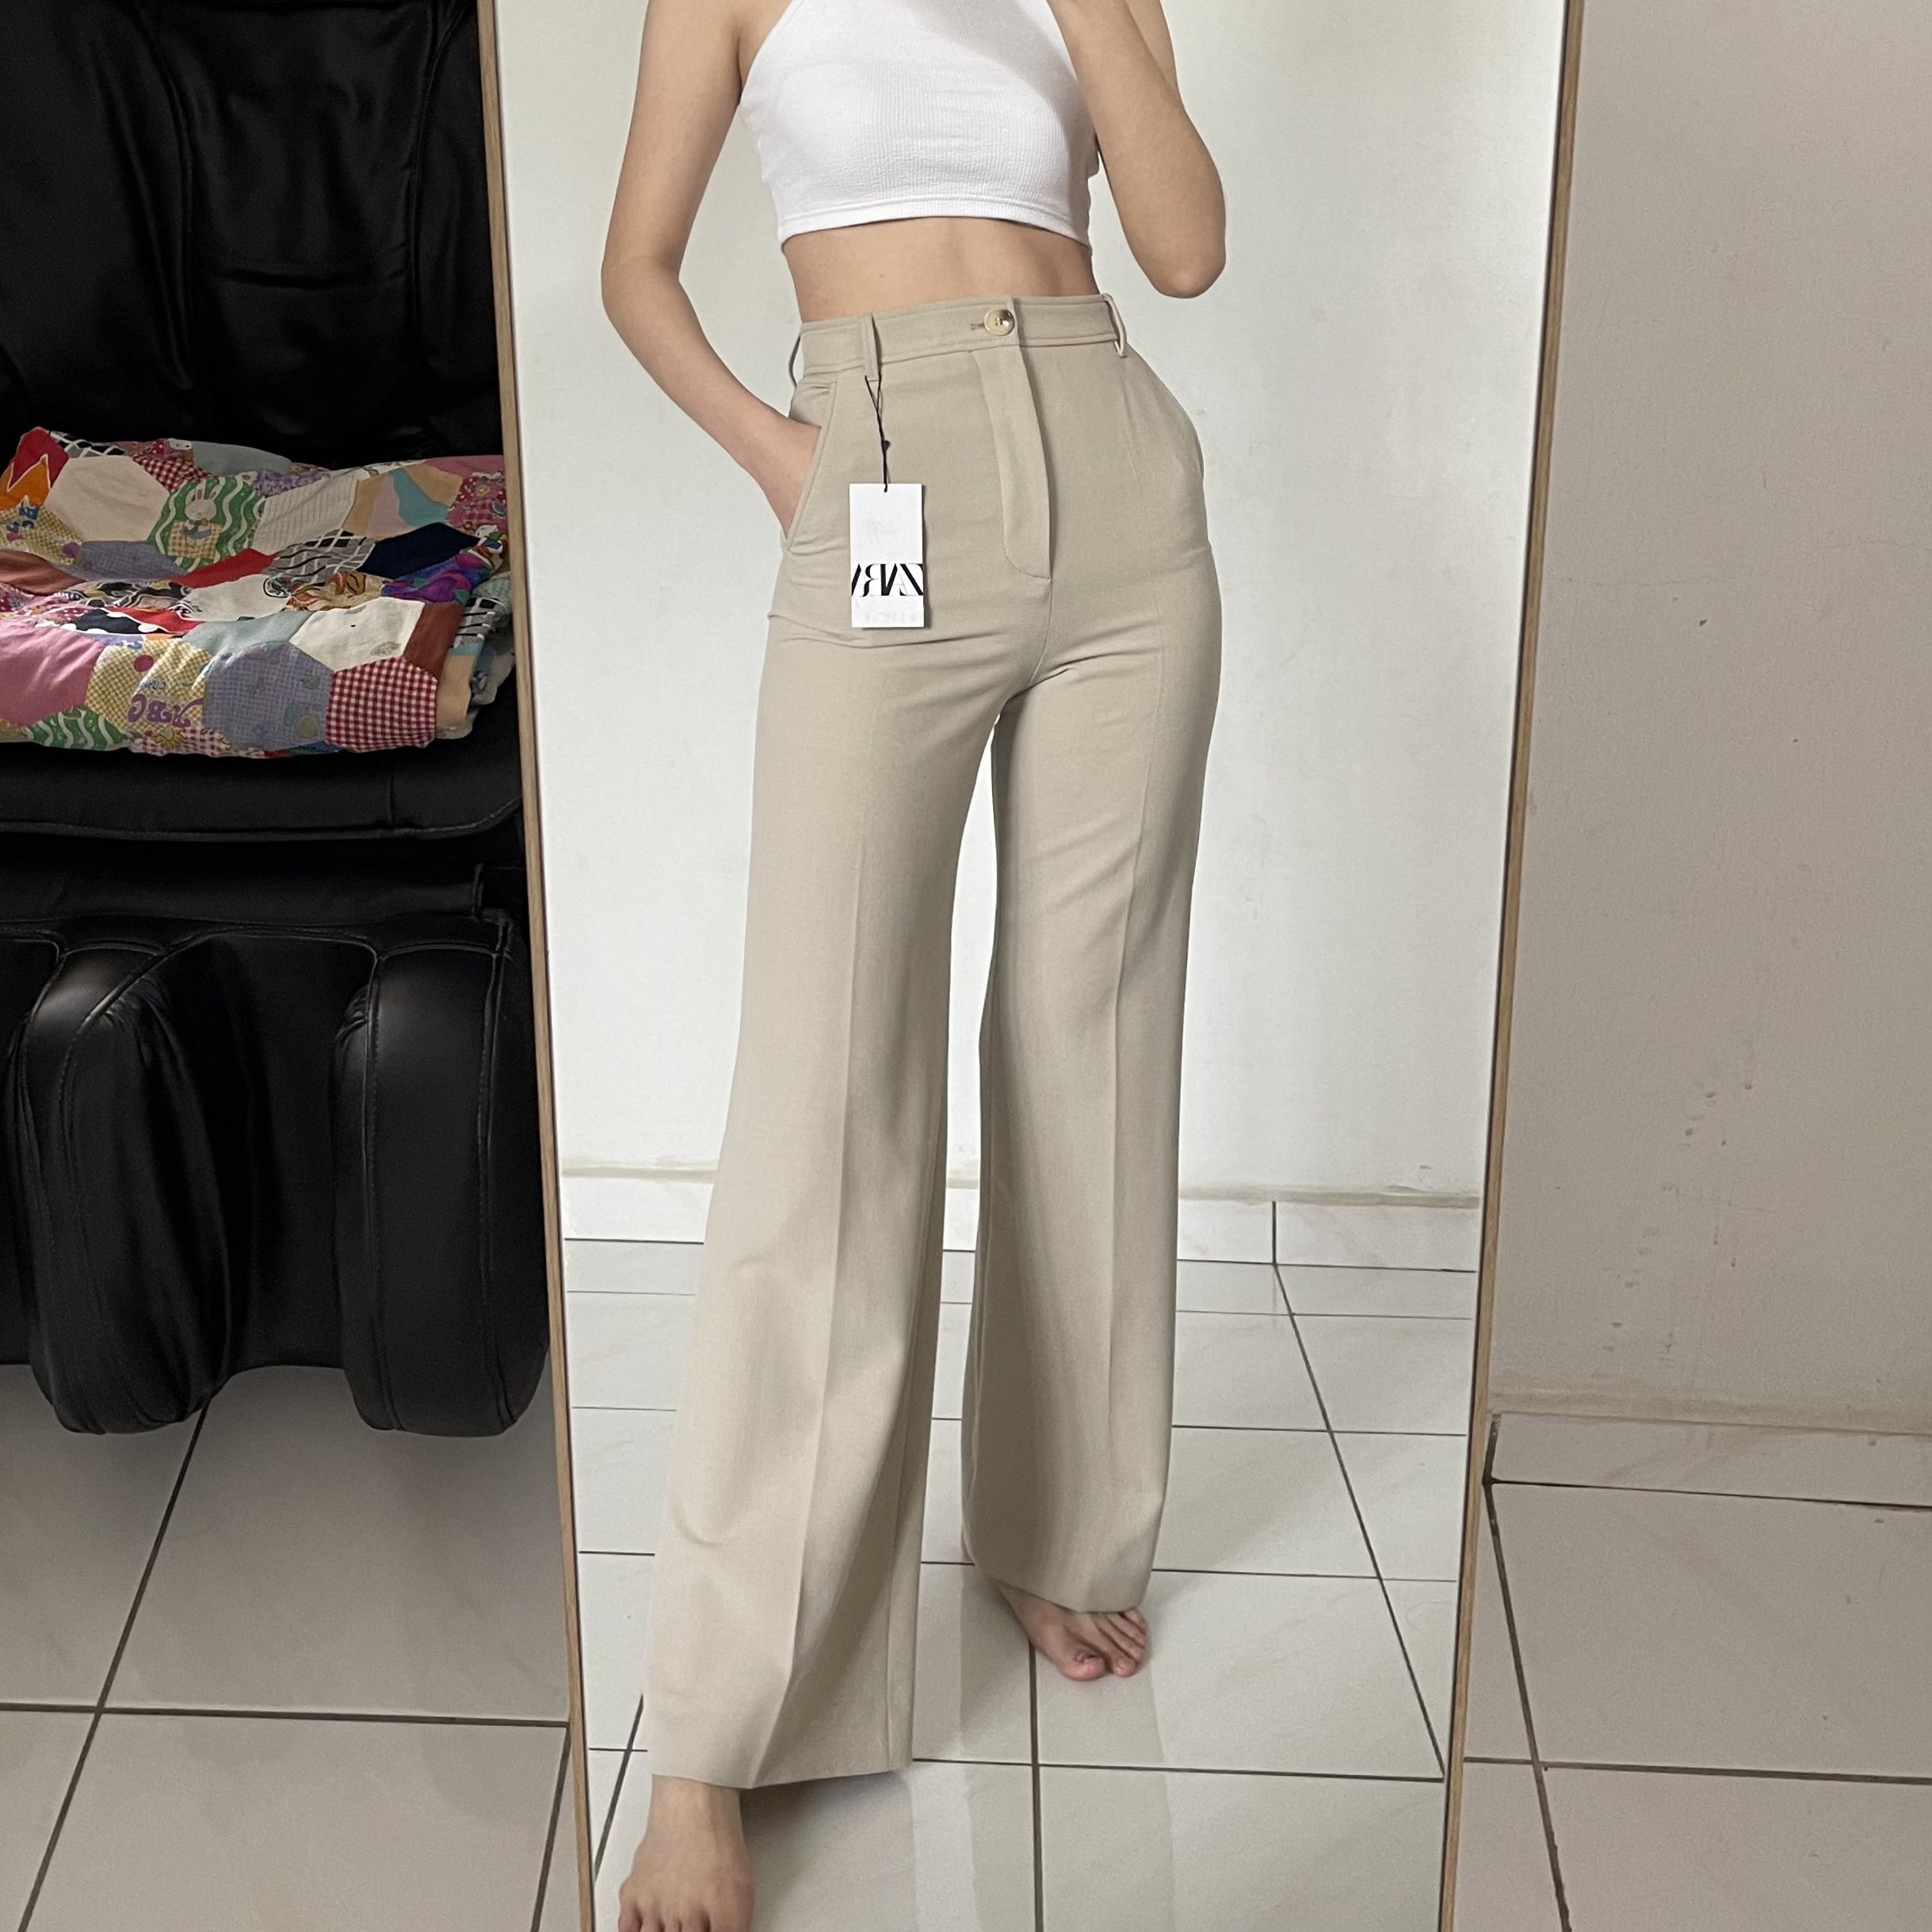 Zara | Pants & Jumpsuits | Zara High Waisted Pants Blogger Favorite |  Poshmark